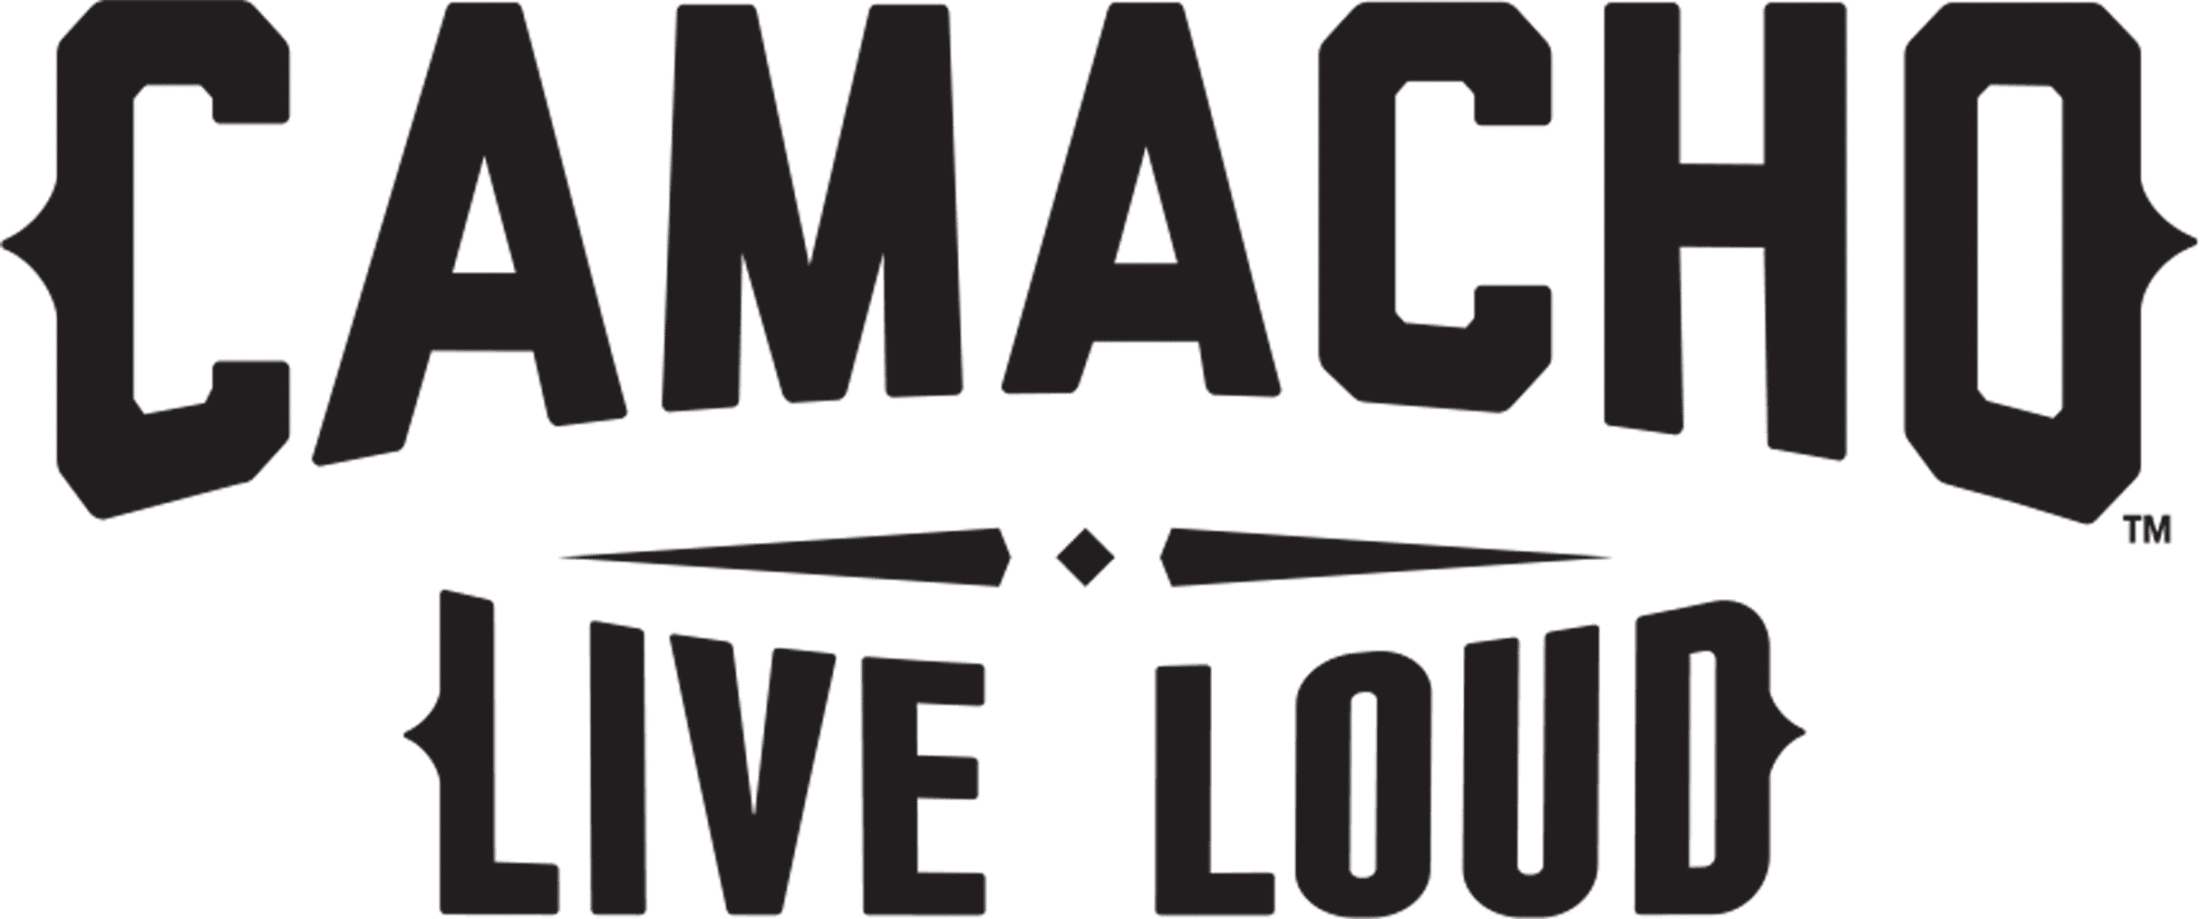 Camacho Live Loud logo